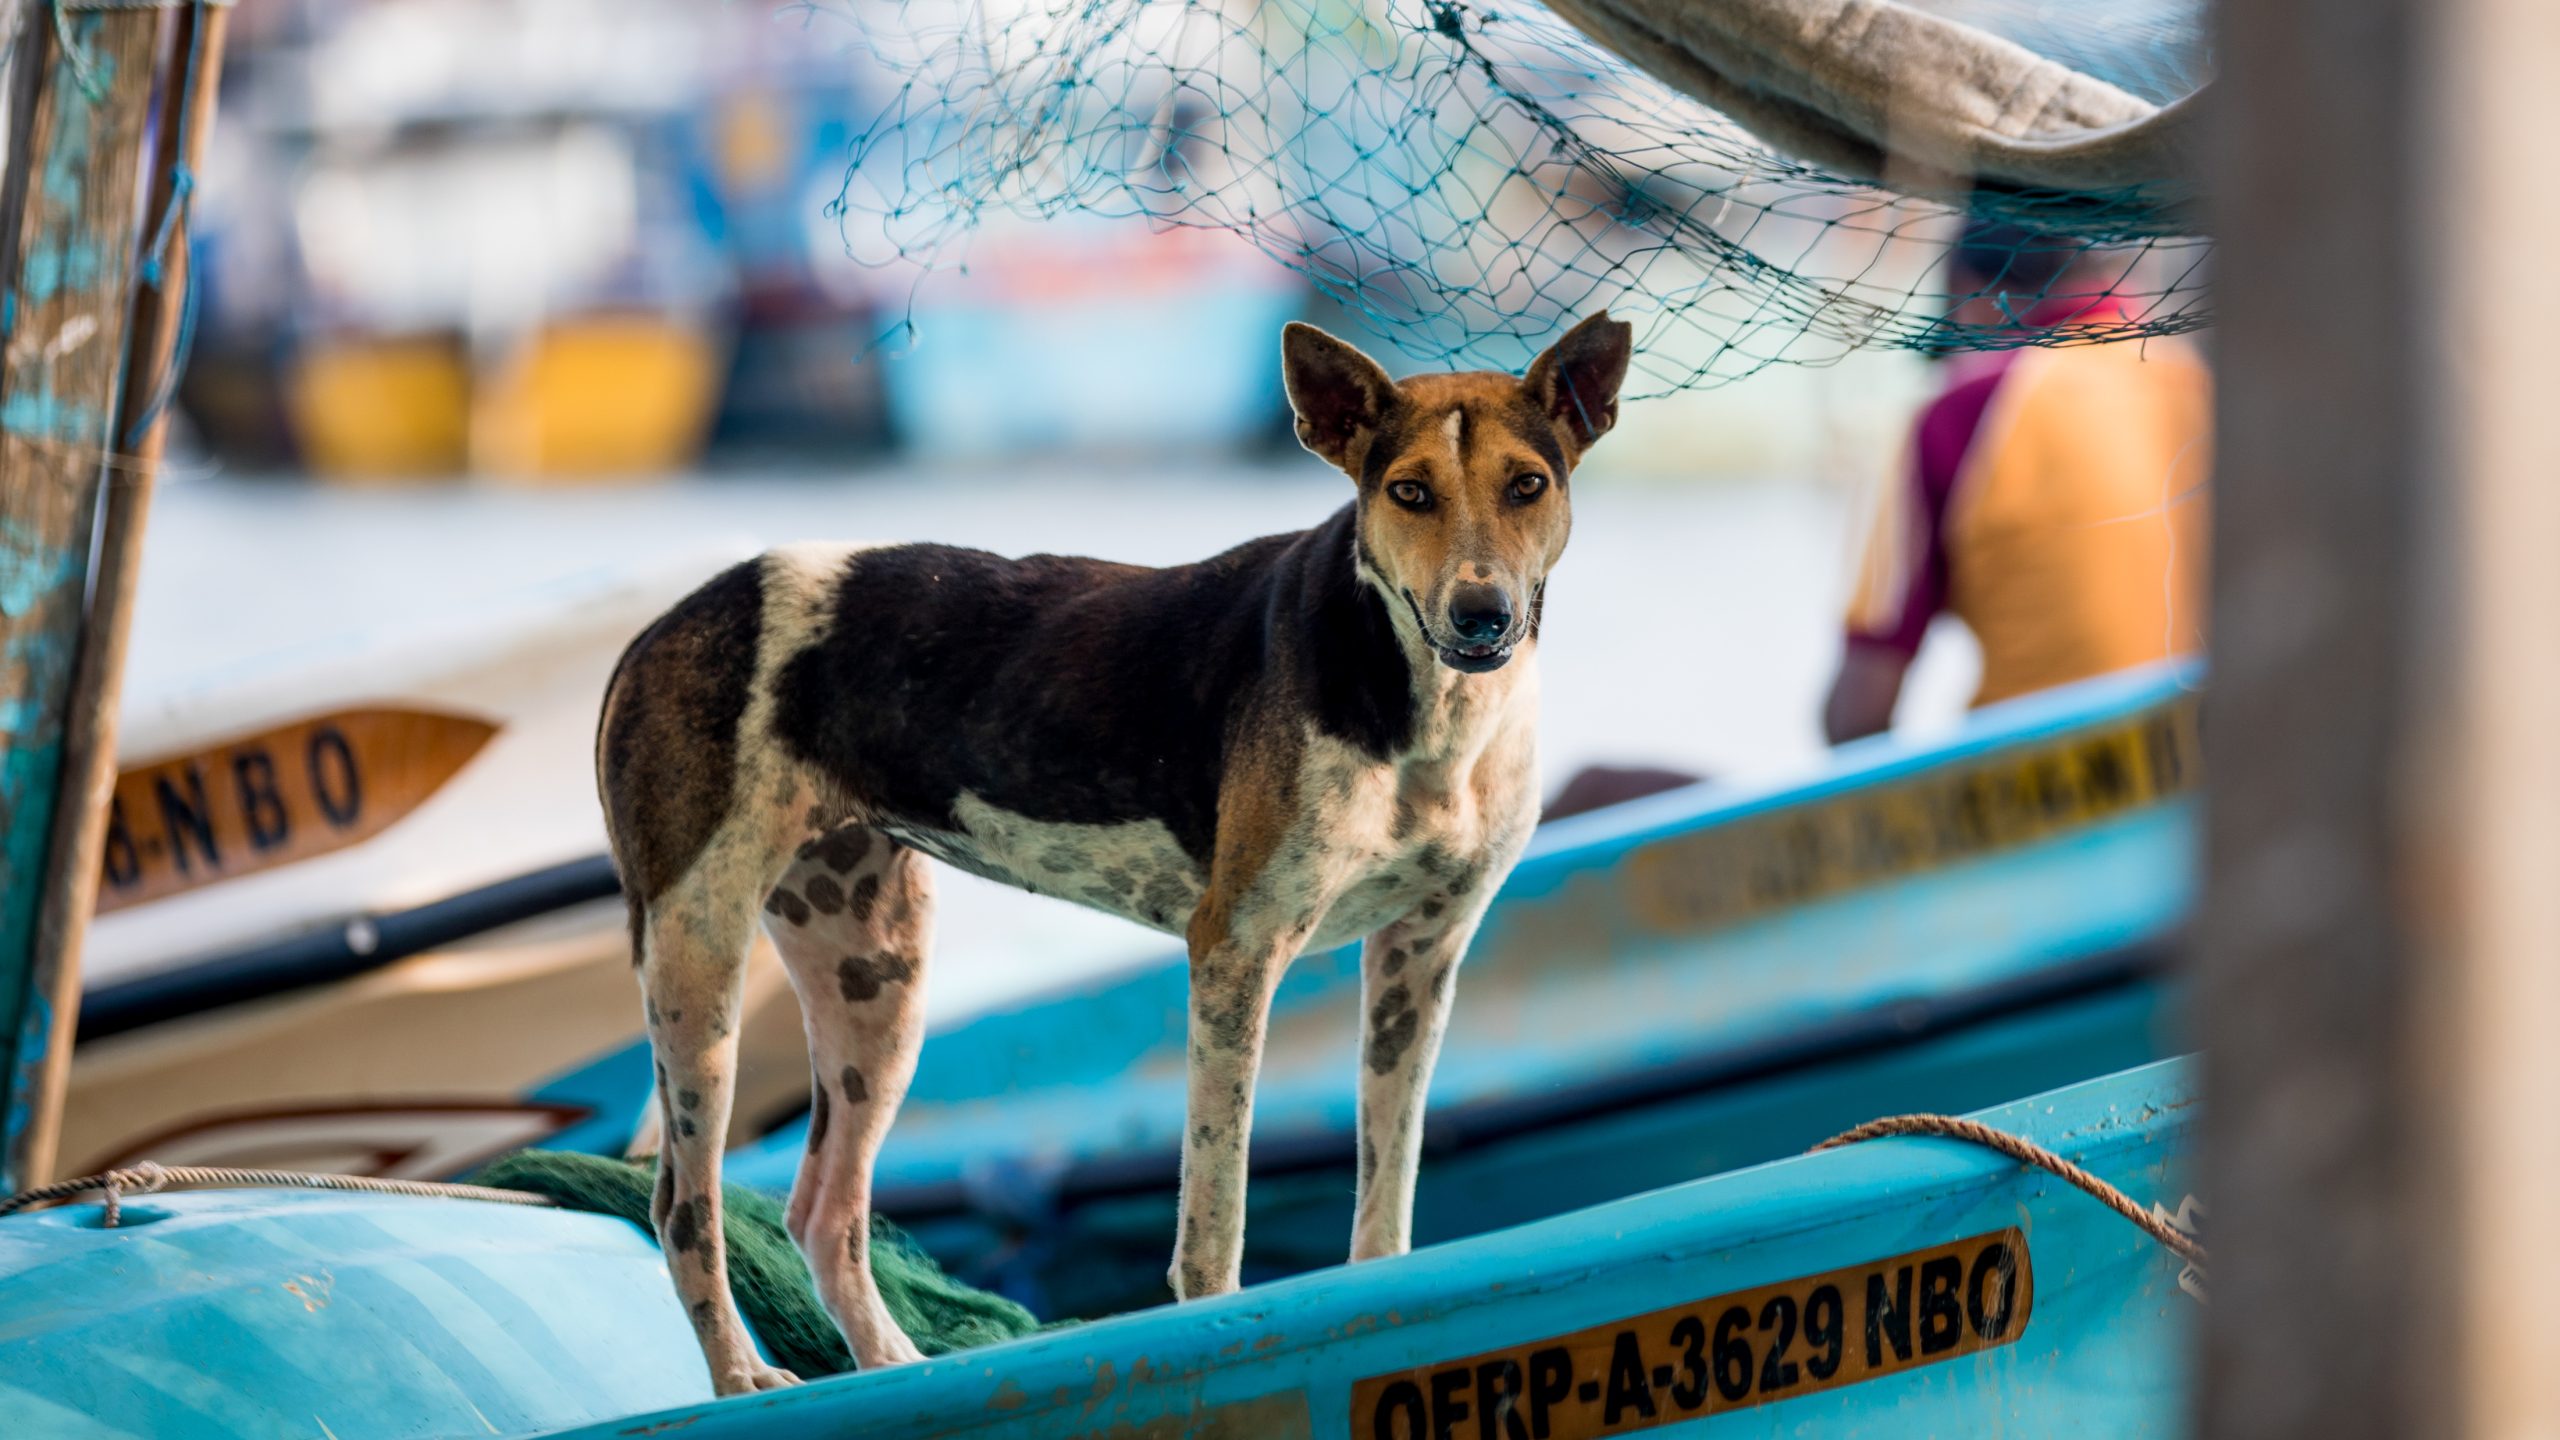 Street dog in Sri Lanka standing on a boat.